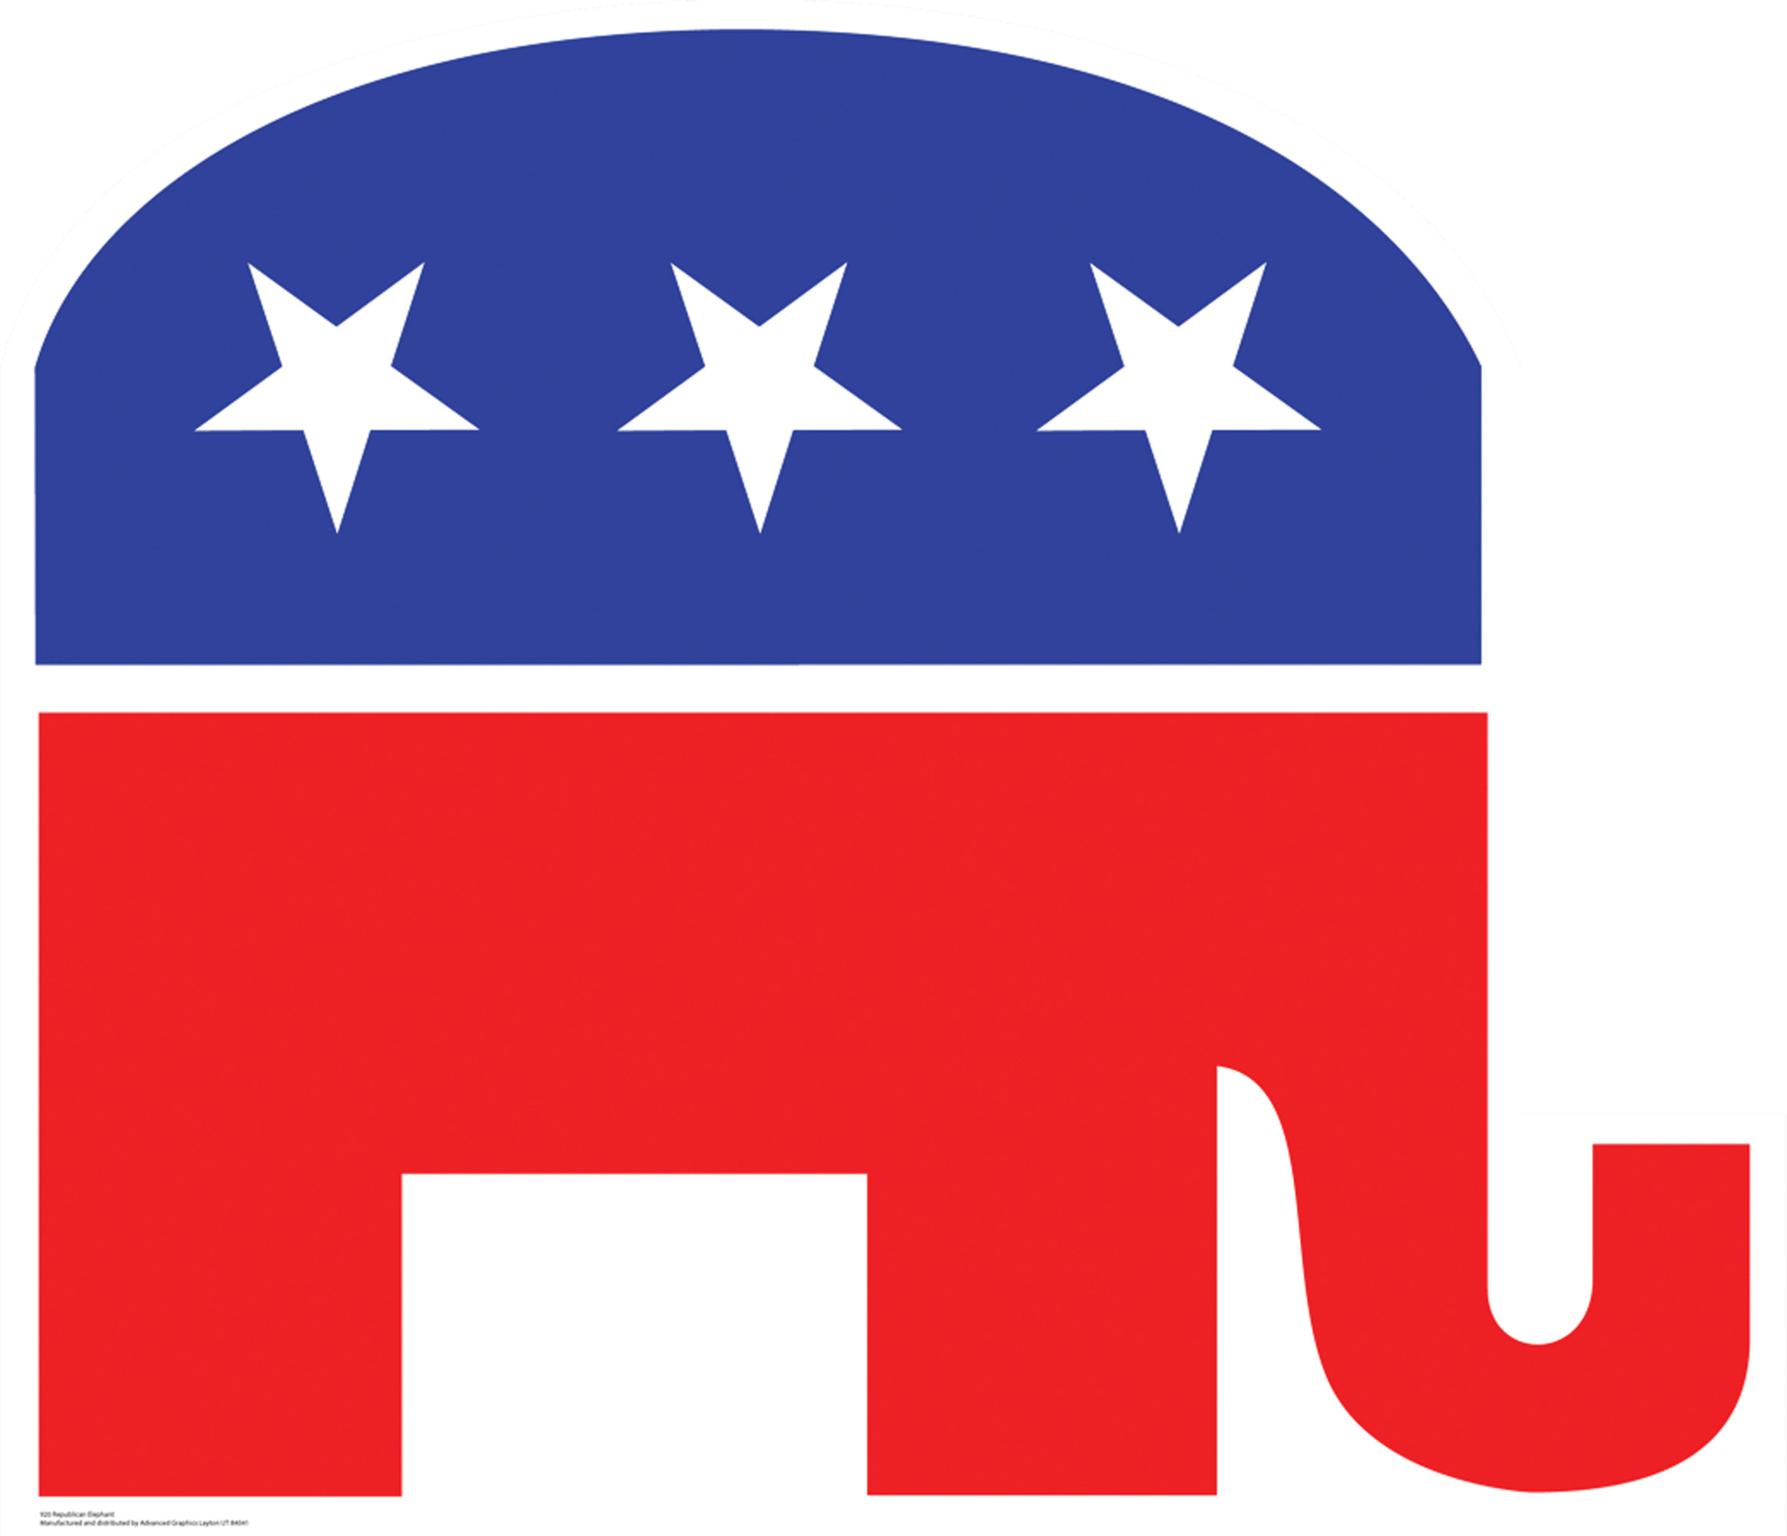 republican party: Republican 